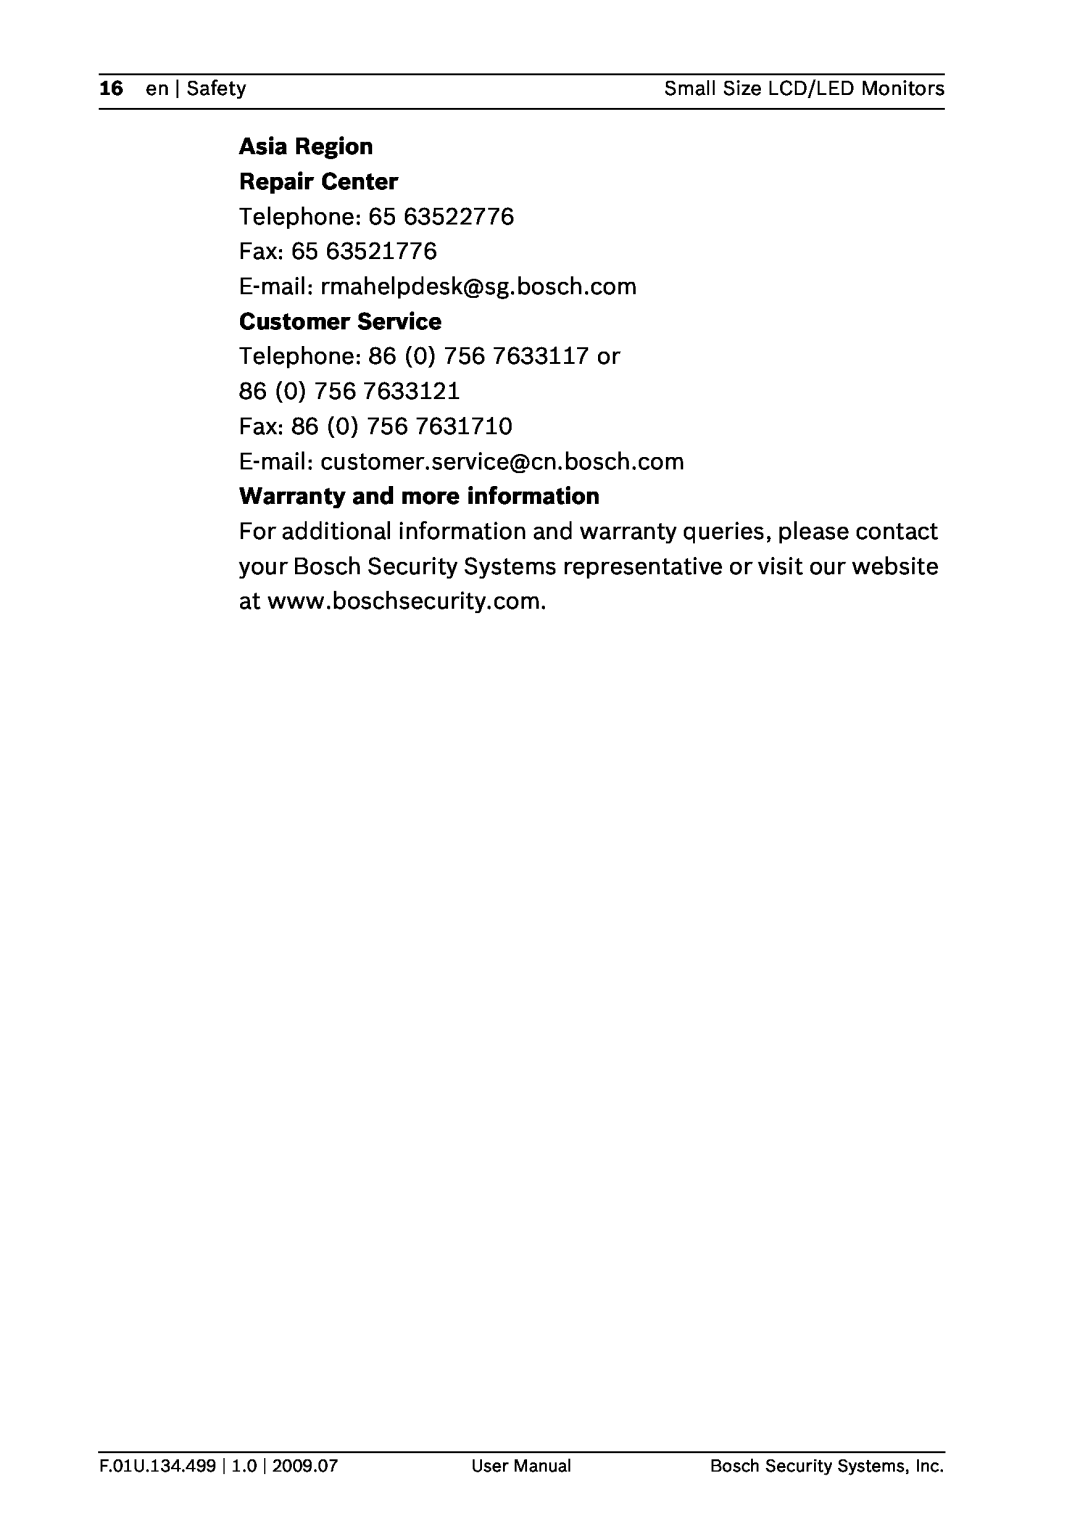 Bosch Appliances UML-102-90 Asia Region Repair Center, Warranty and more information, Customer Service, F.01U.134.499 1.0 